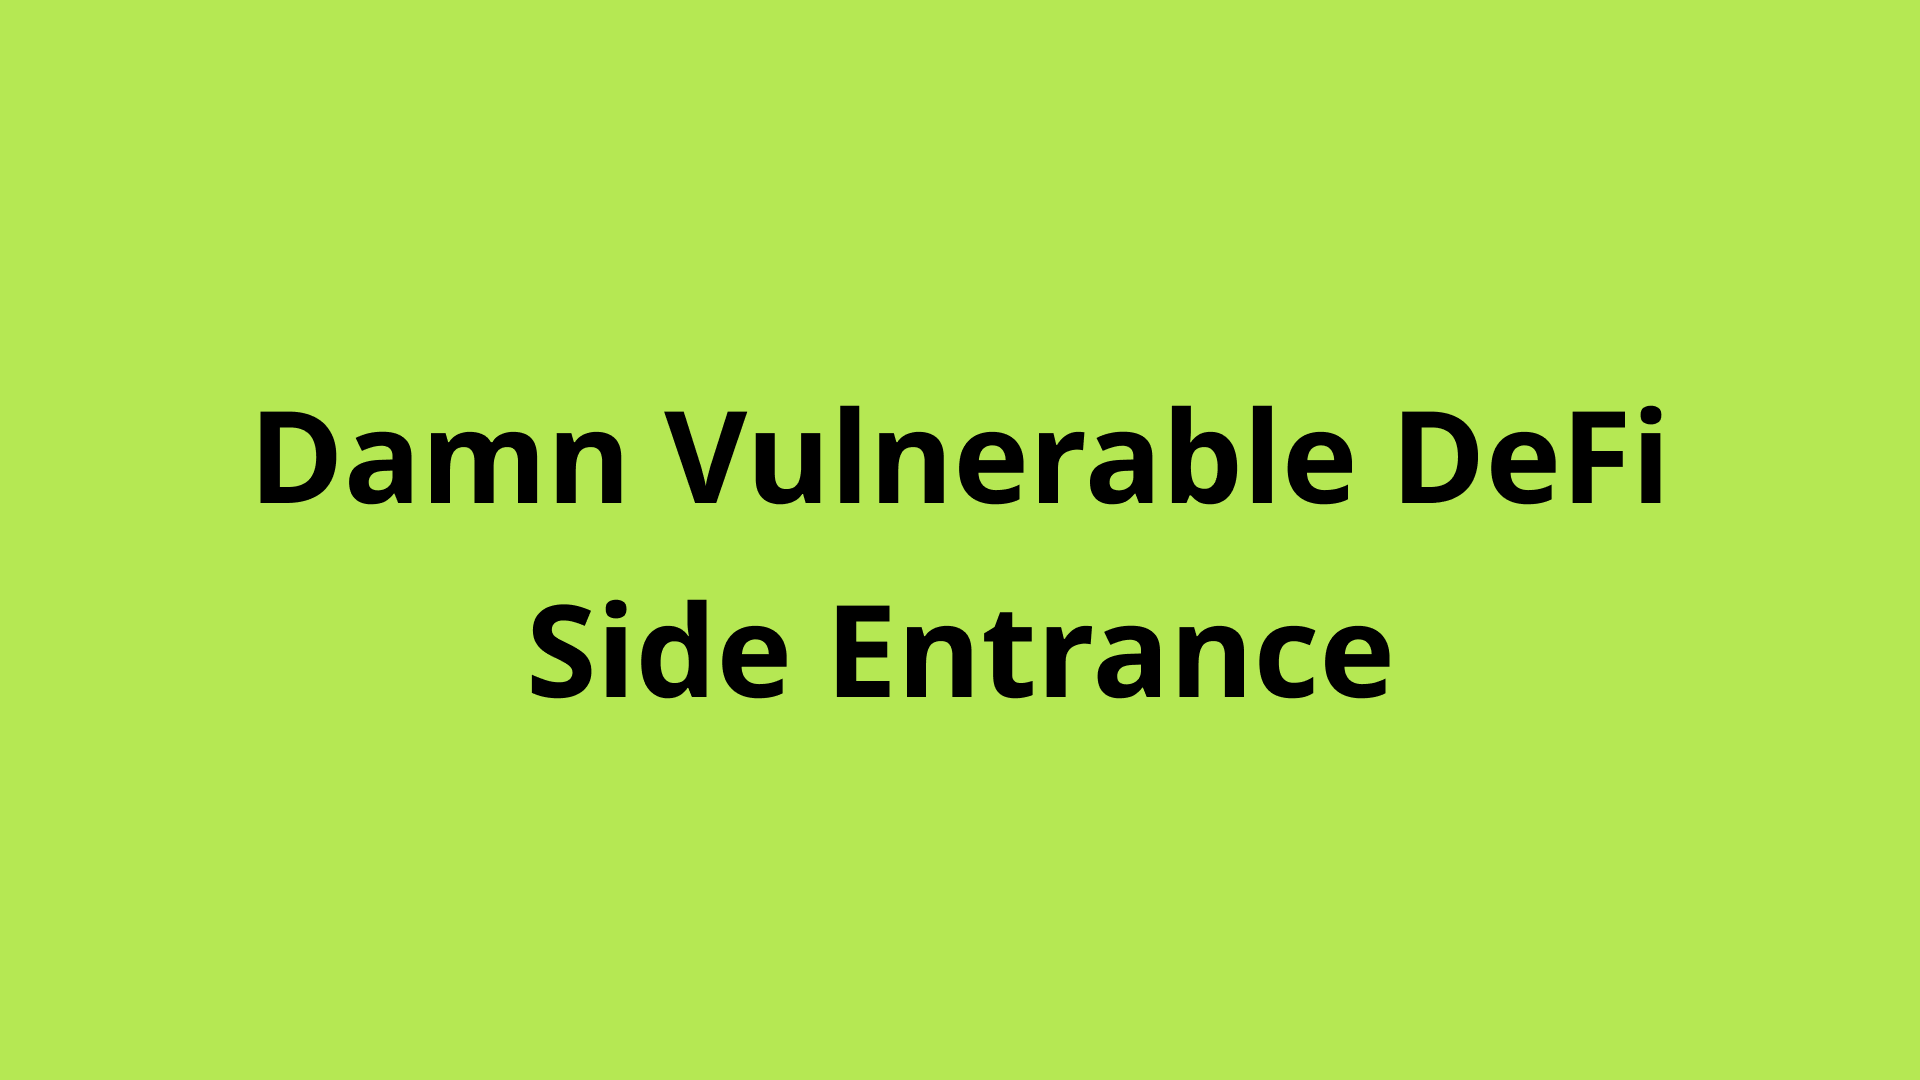 Damn Vulnerable DeFi - Side Entrance